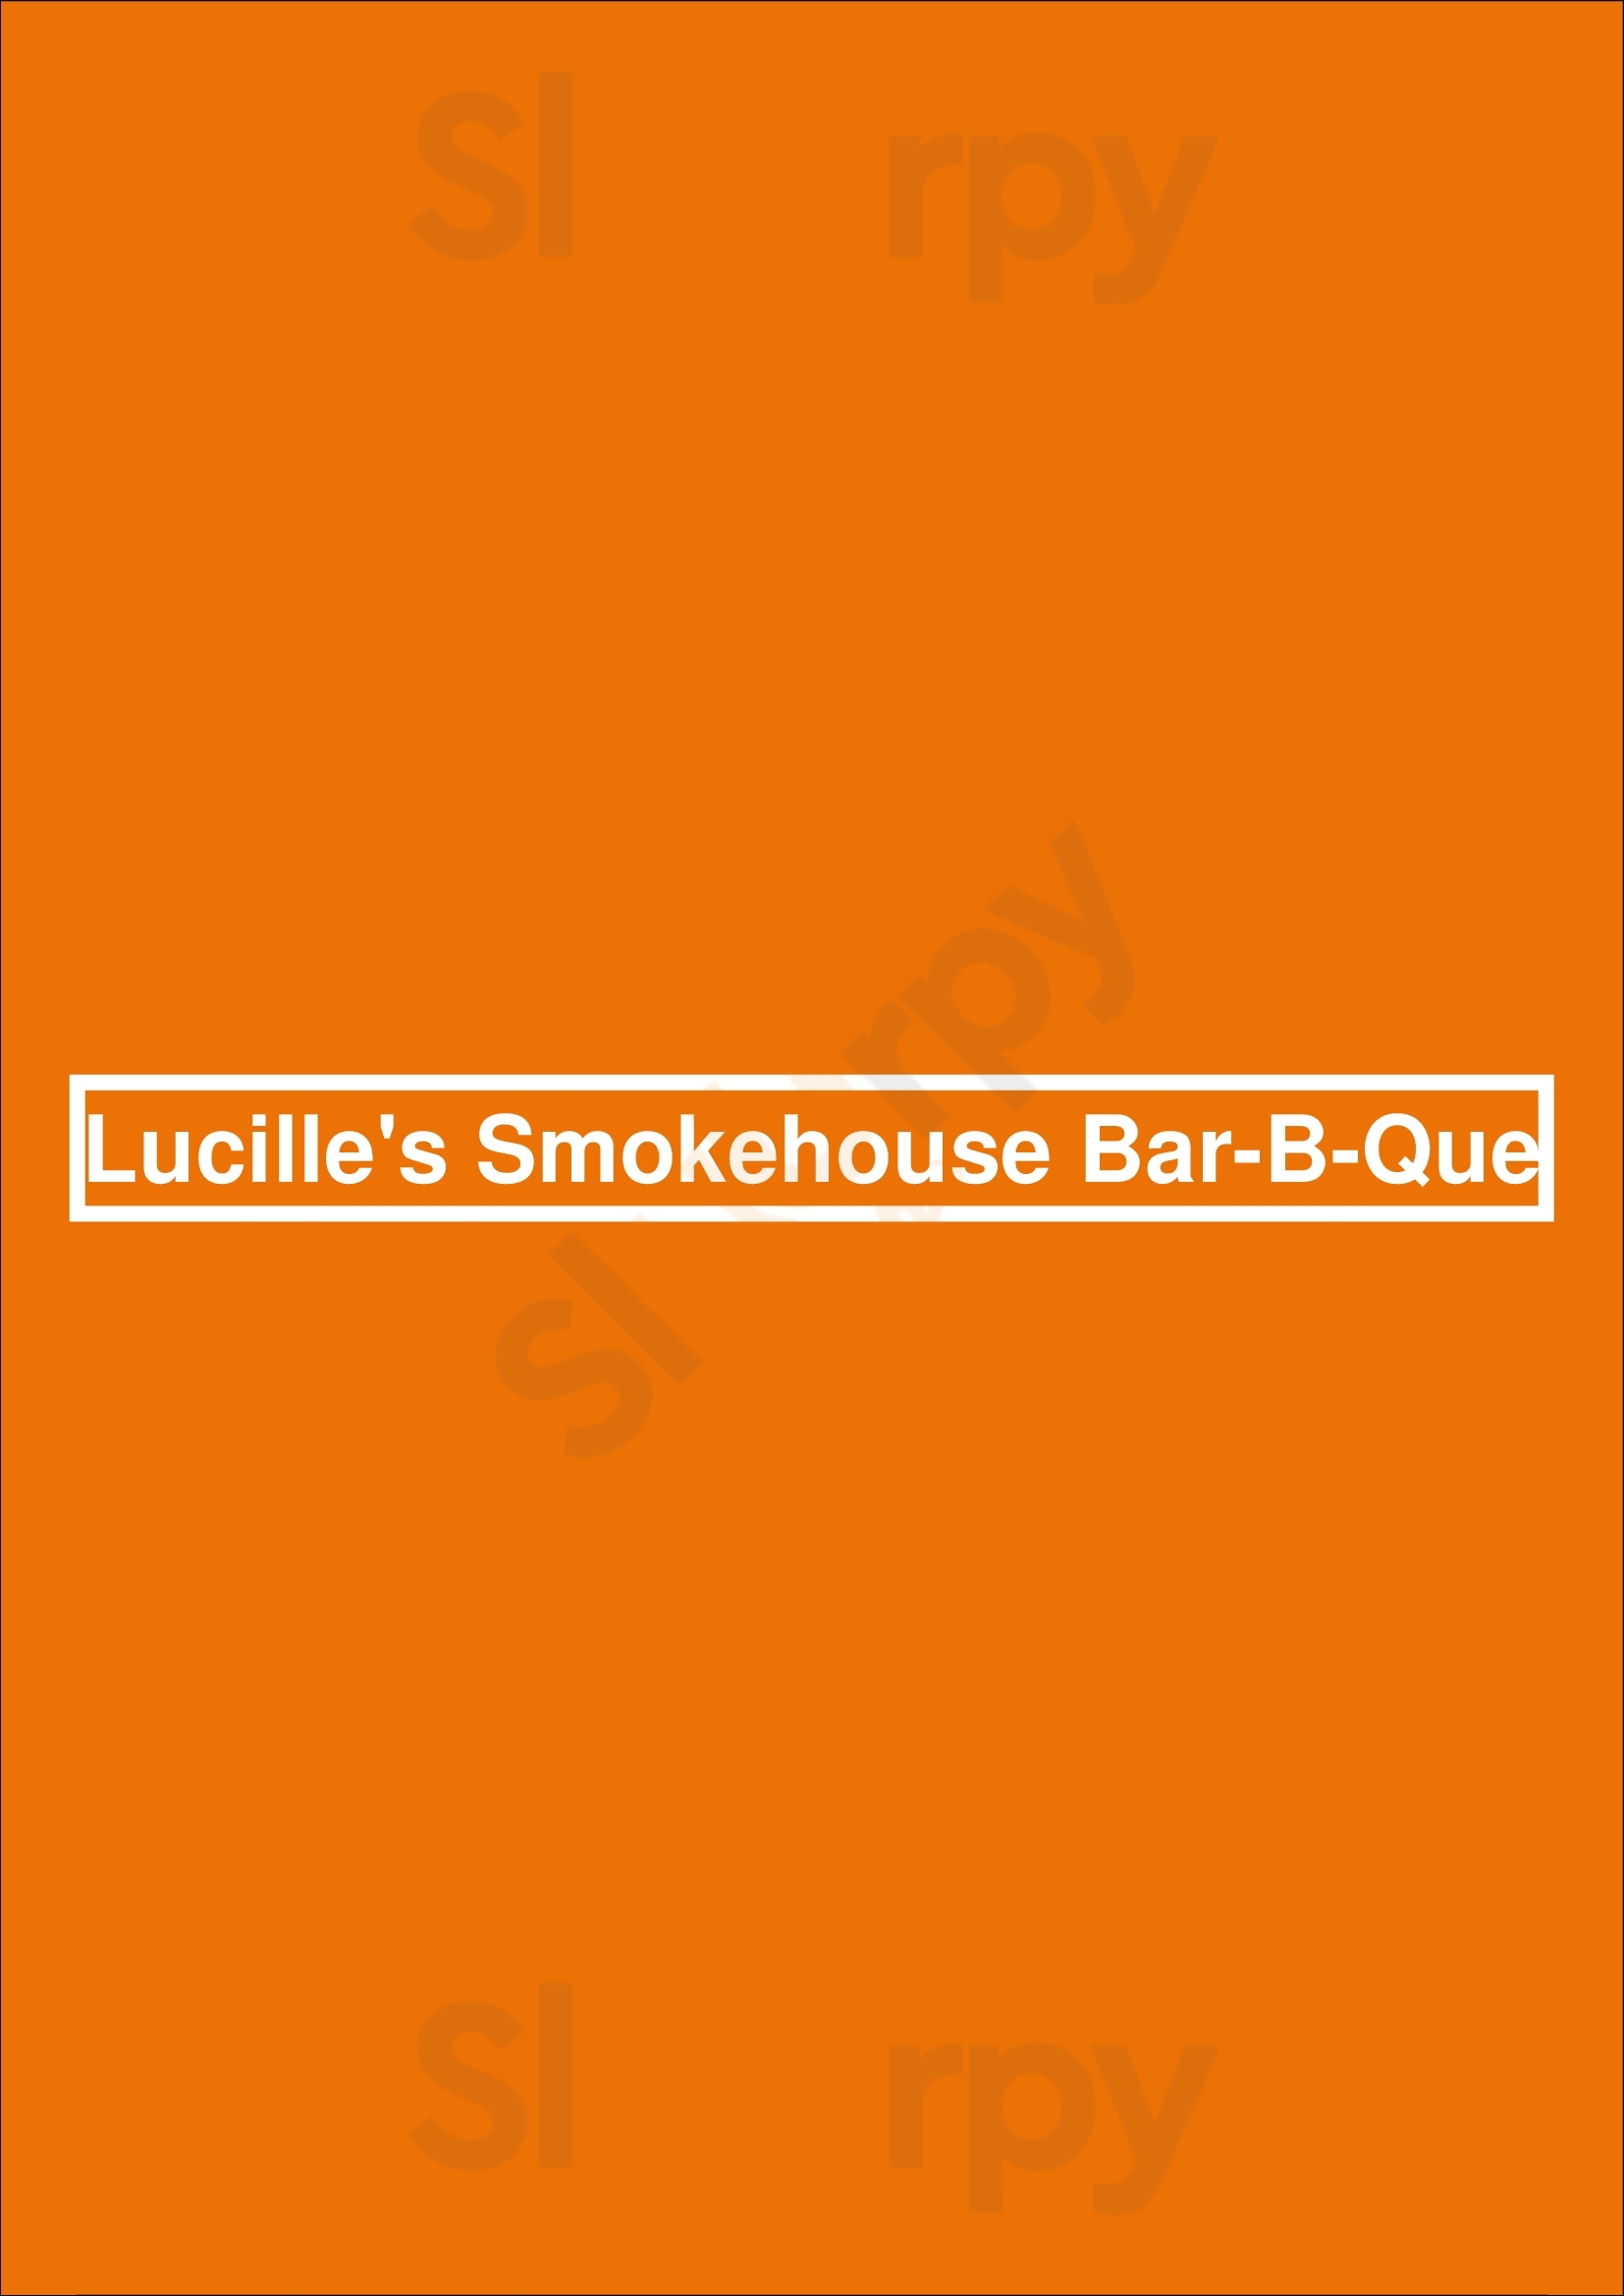 Lucille's Smokehouse Bar-b-que Long Beach Menu - 1